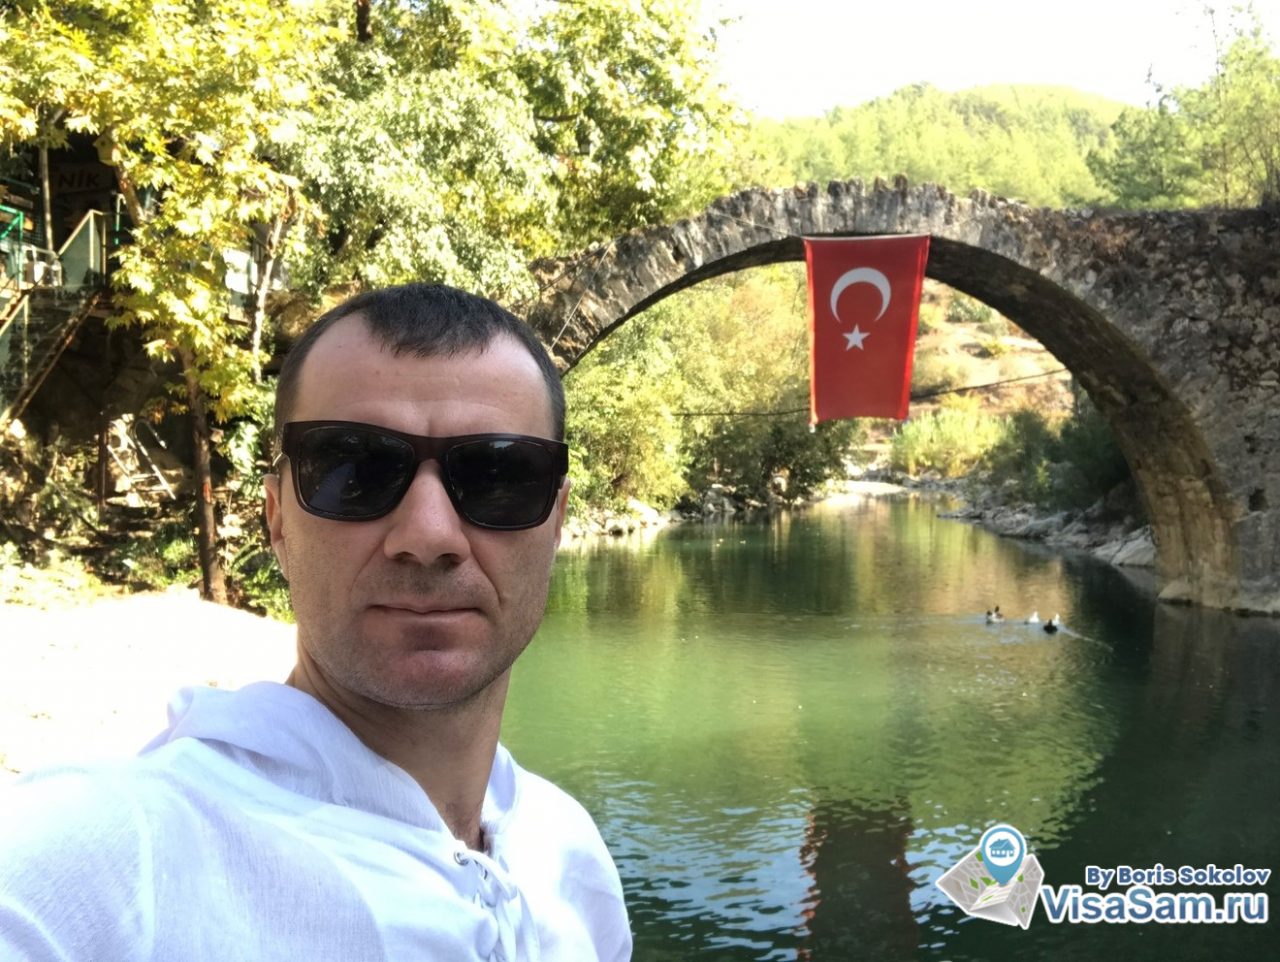 флаг Турции на мосту